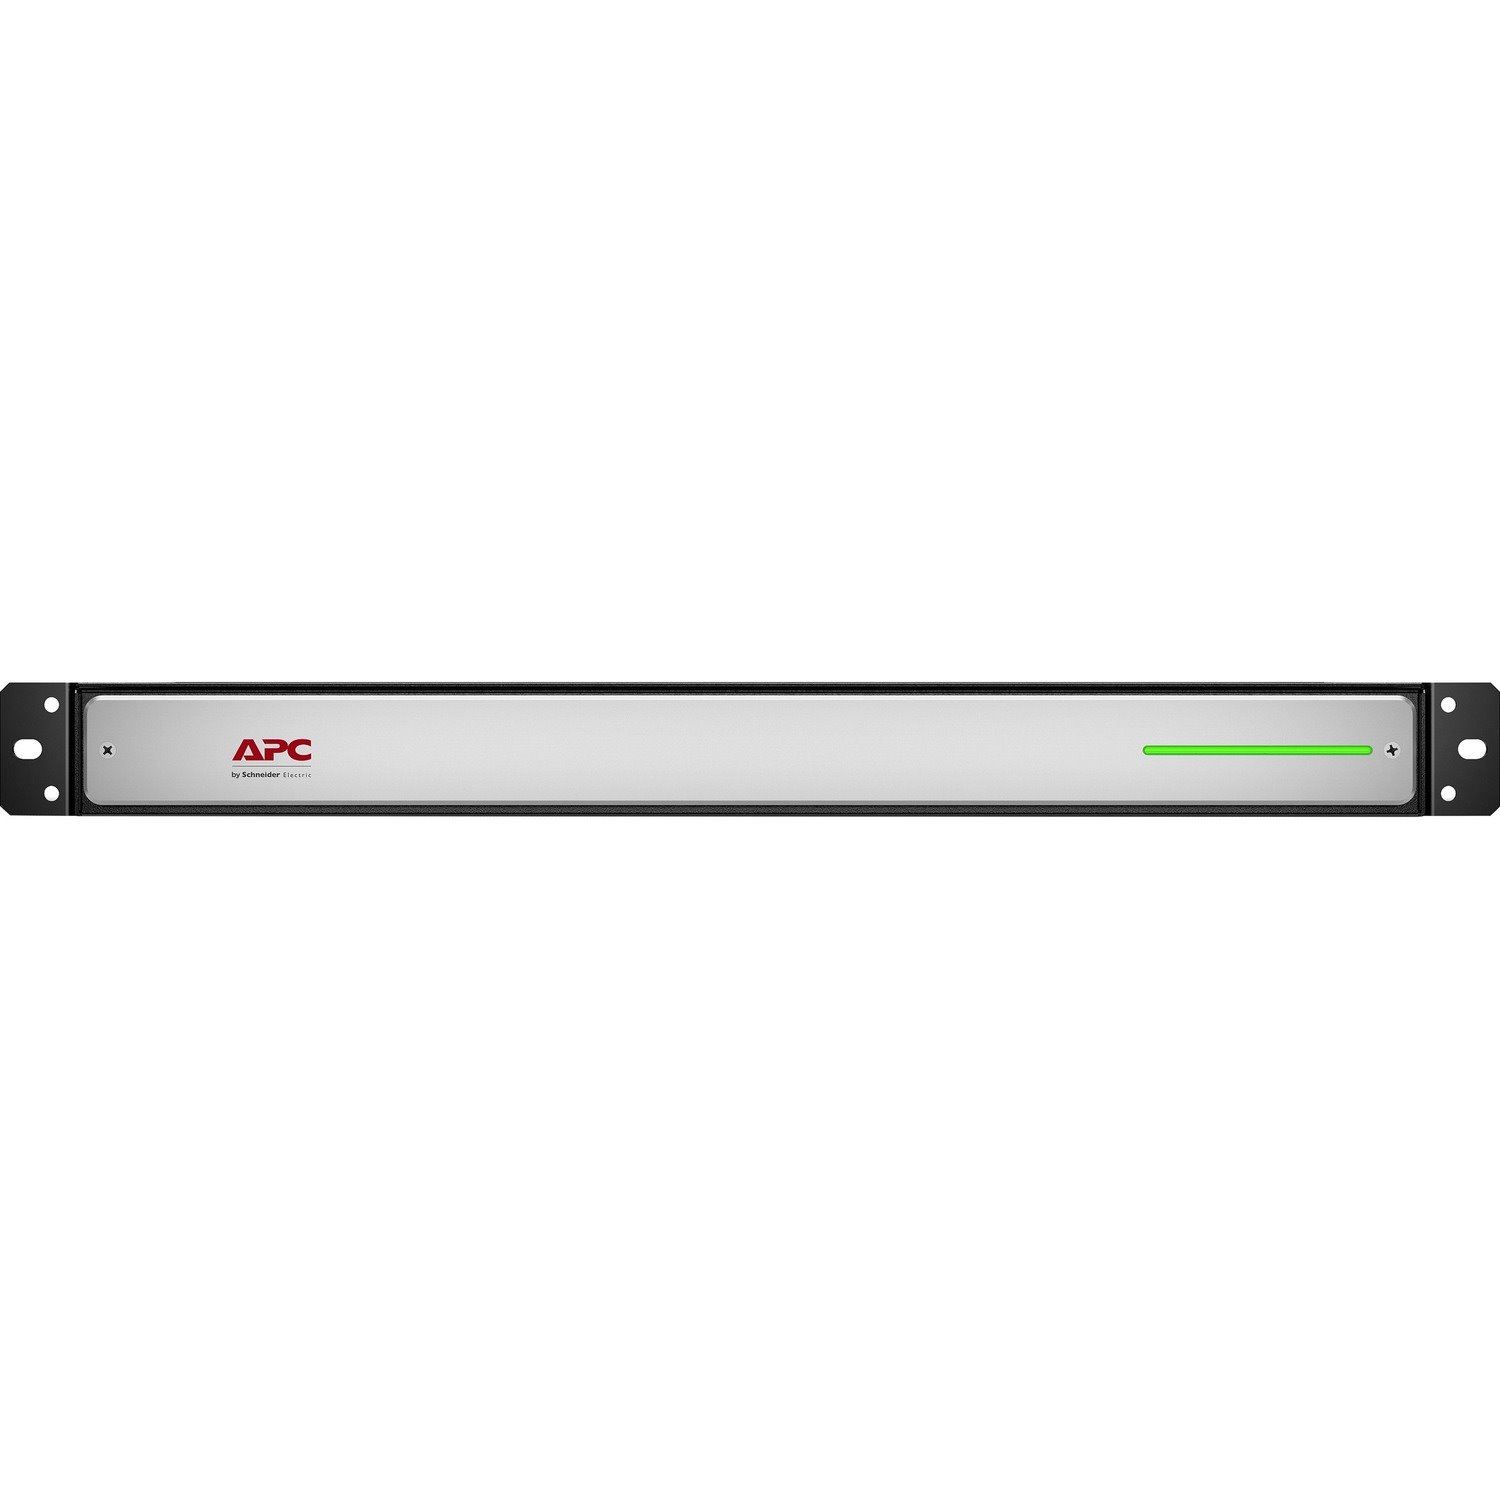 XBP48RM1U-LI APC Smart-UPS Online 48V 1U External Battery Pack